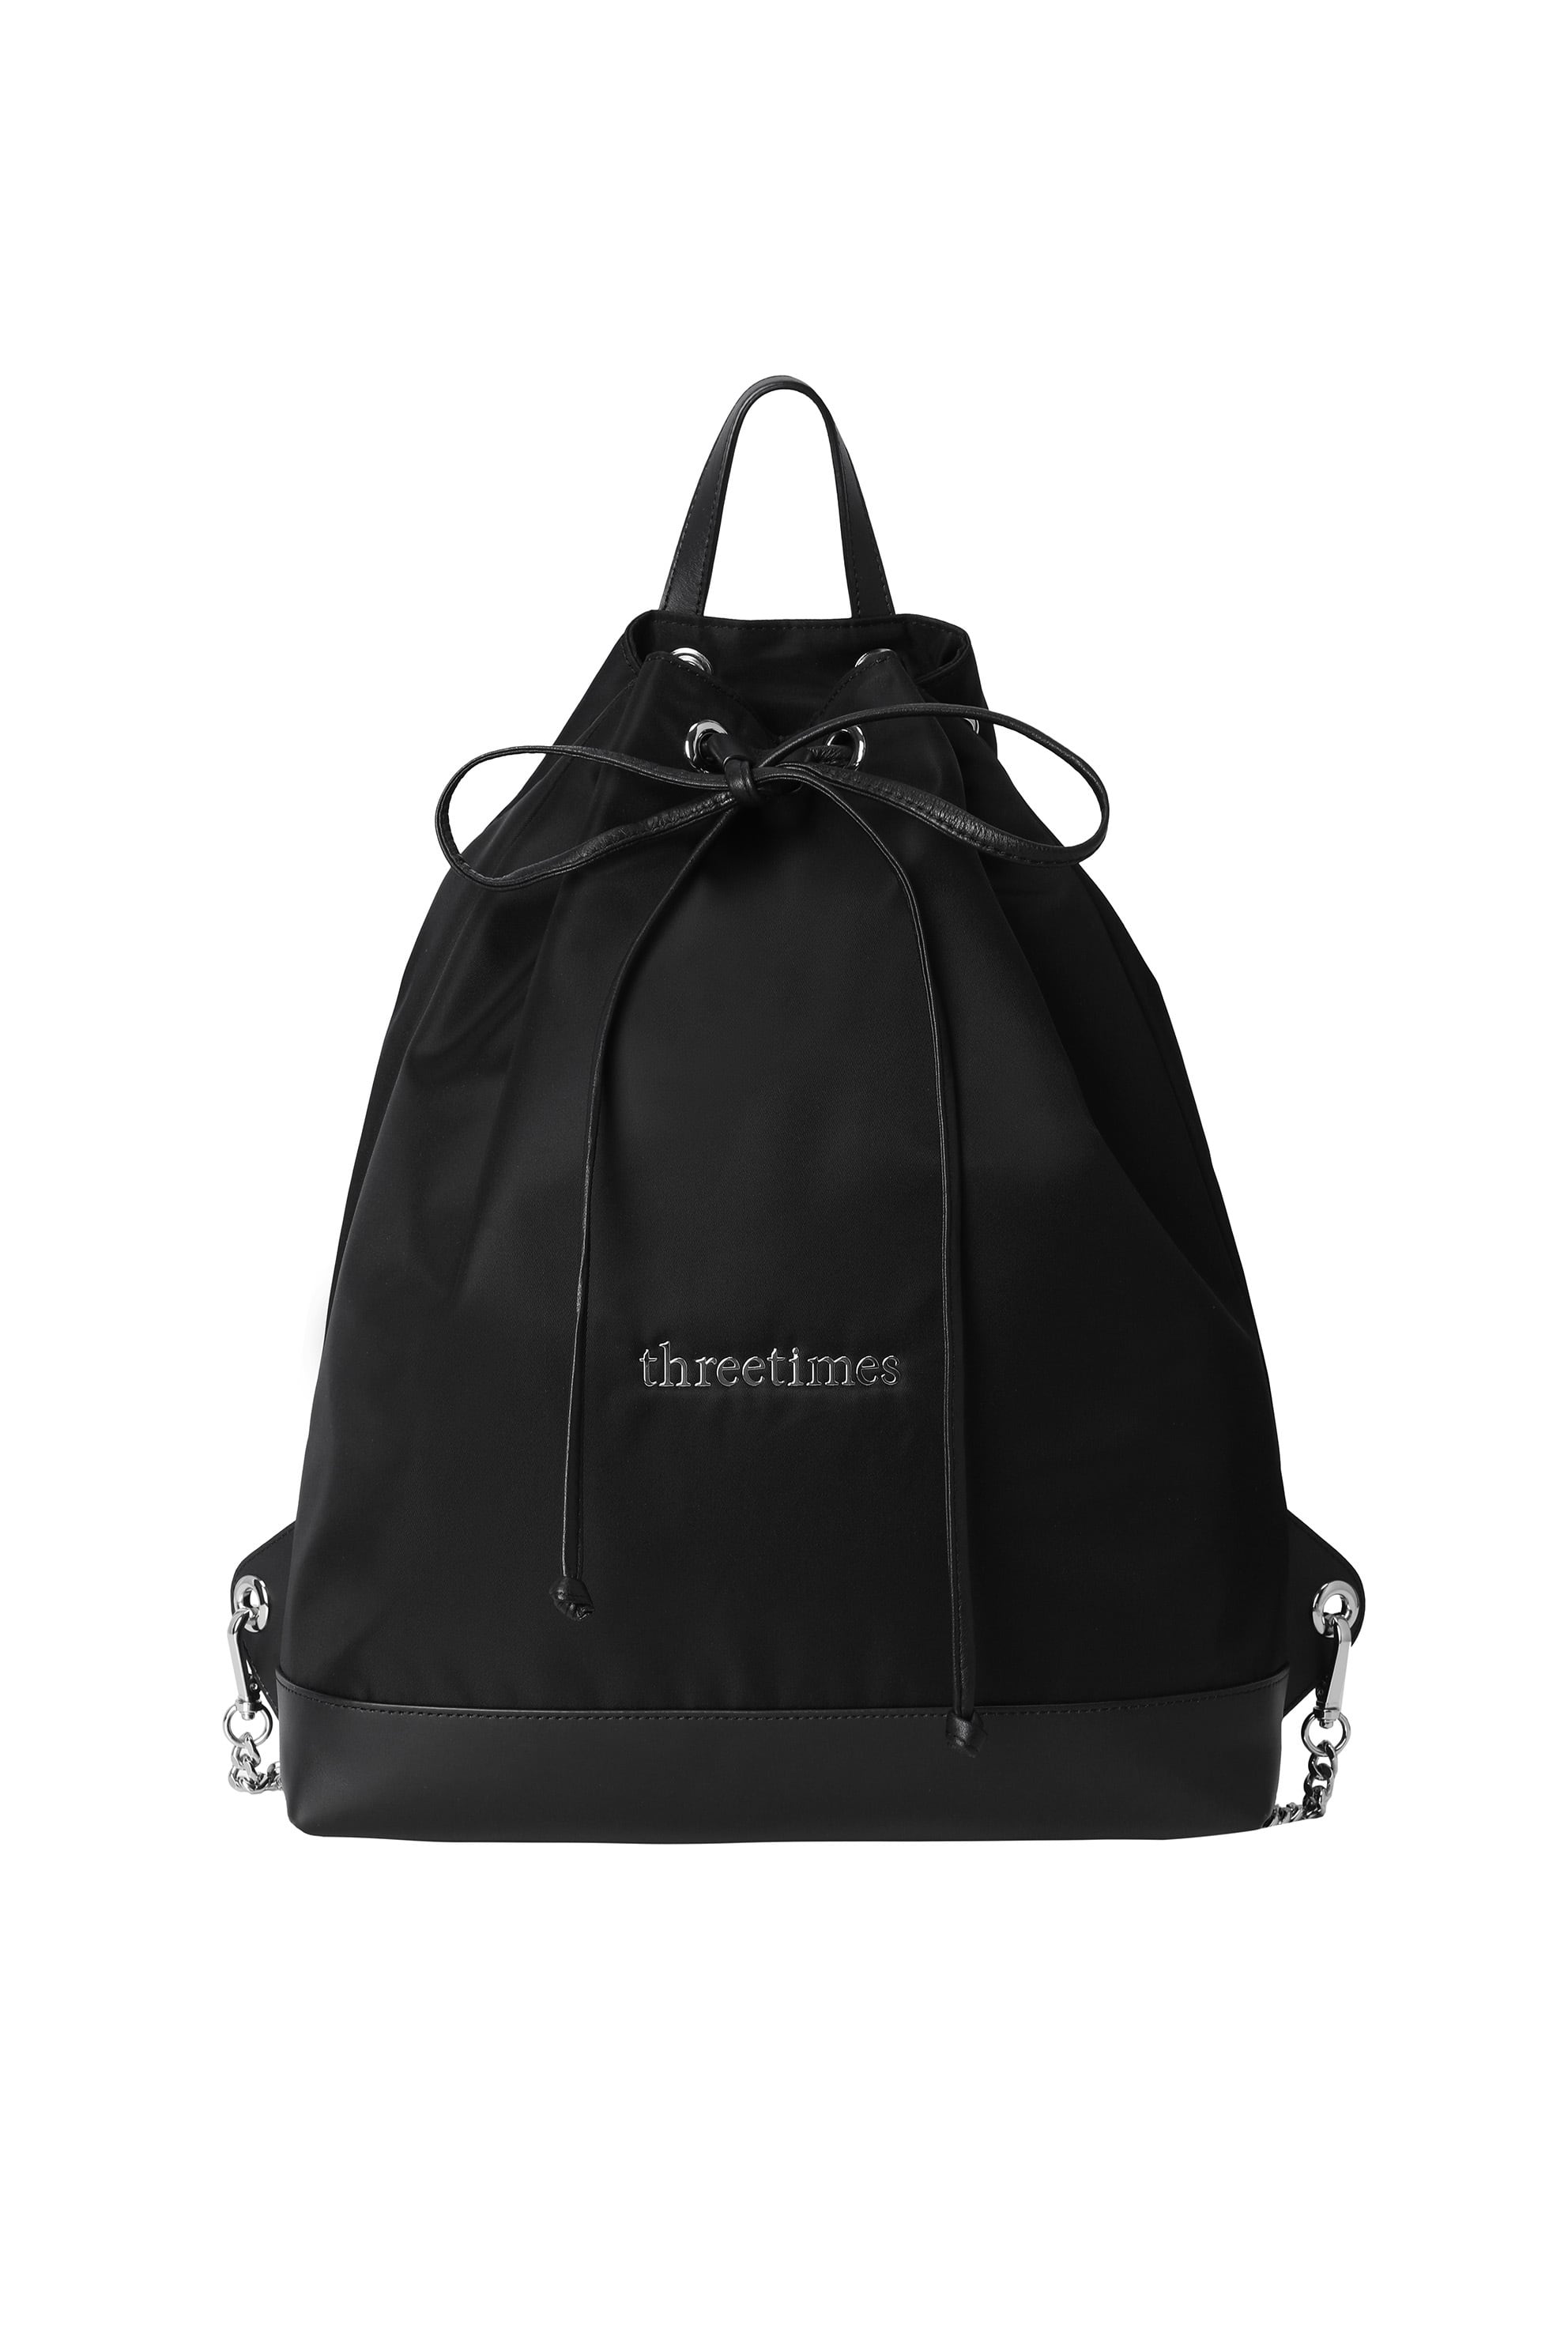 threetimes] Classic tie backpack 正規品 韓国ブランド 韓国通販 韓国